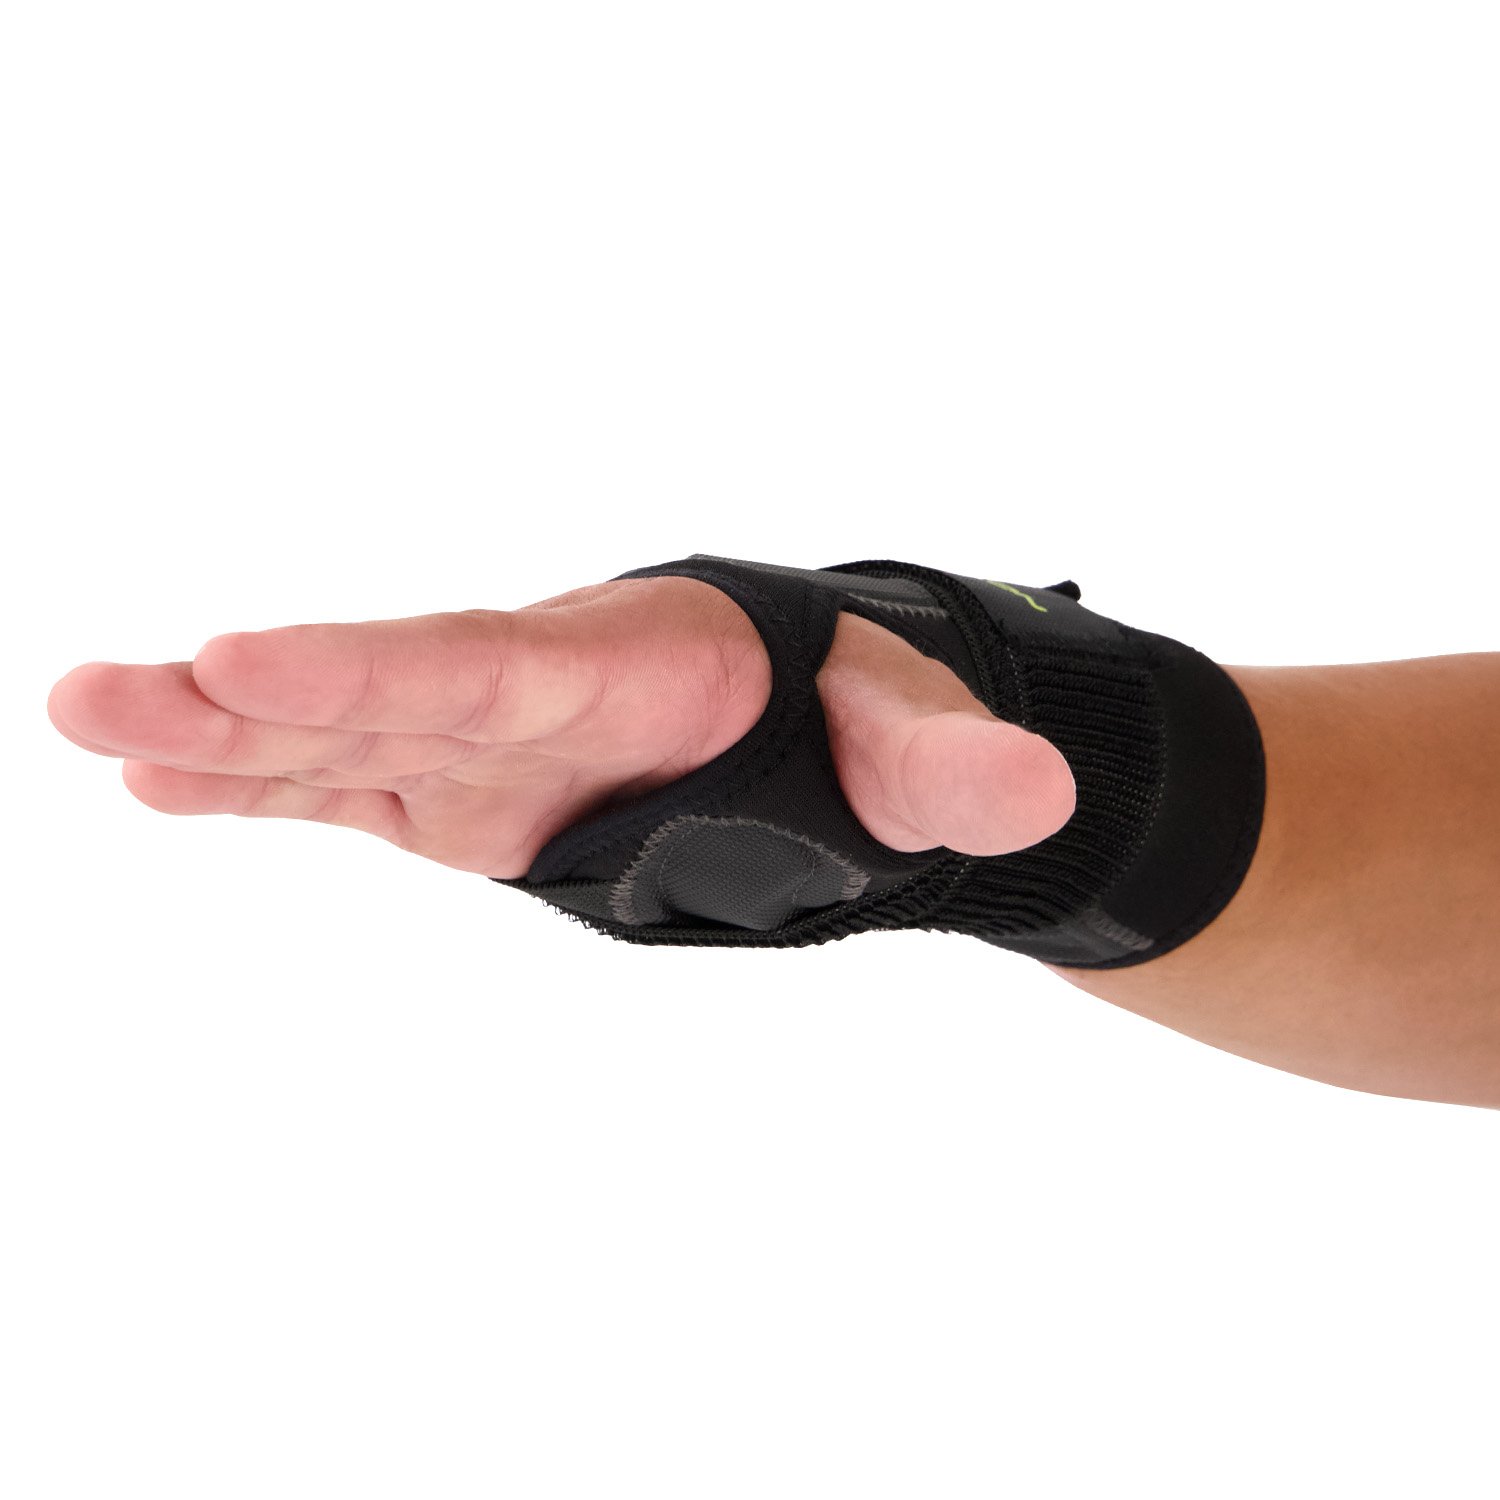 novamed lightweight wrist support product information